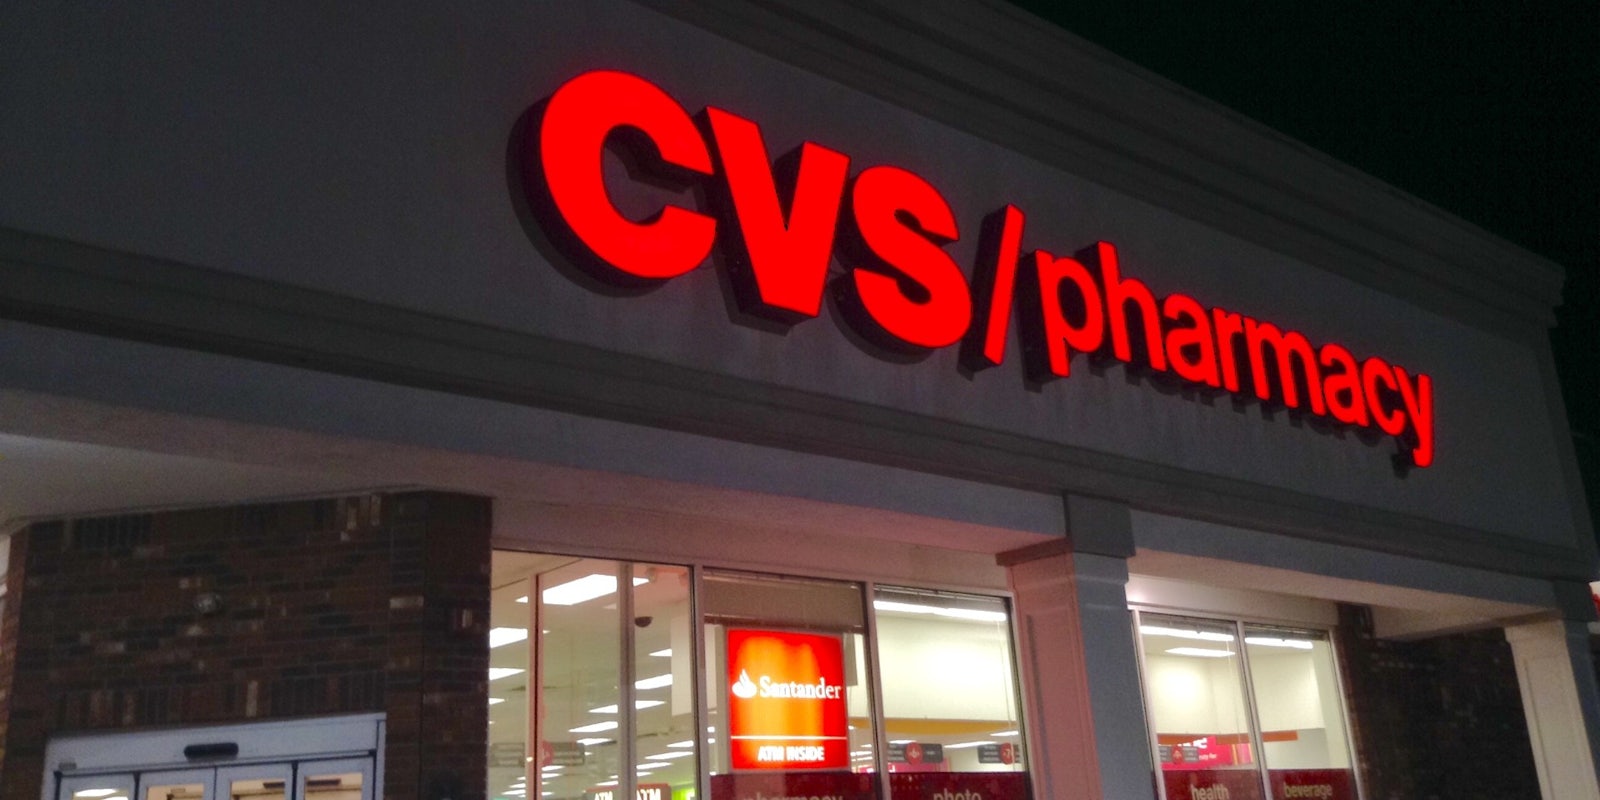 CVS Pharmacy sign in red